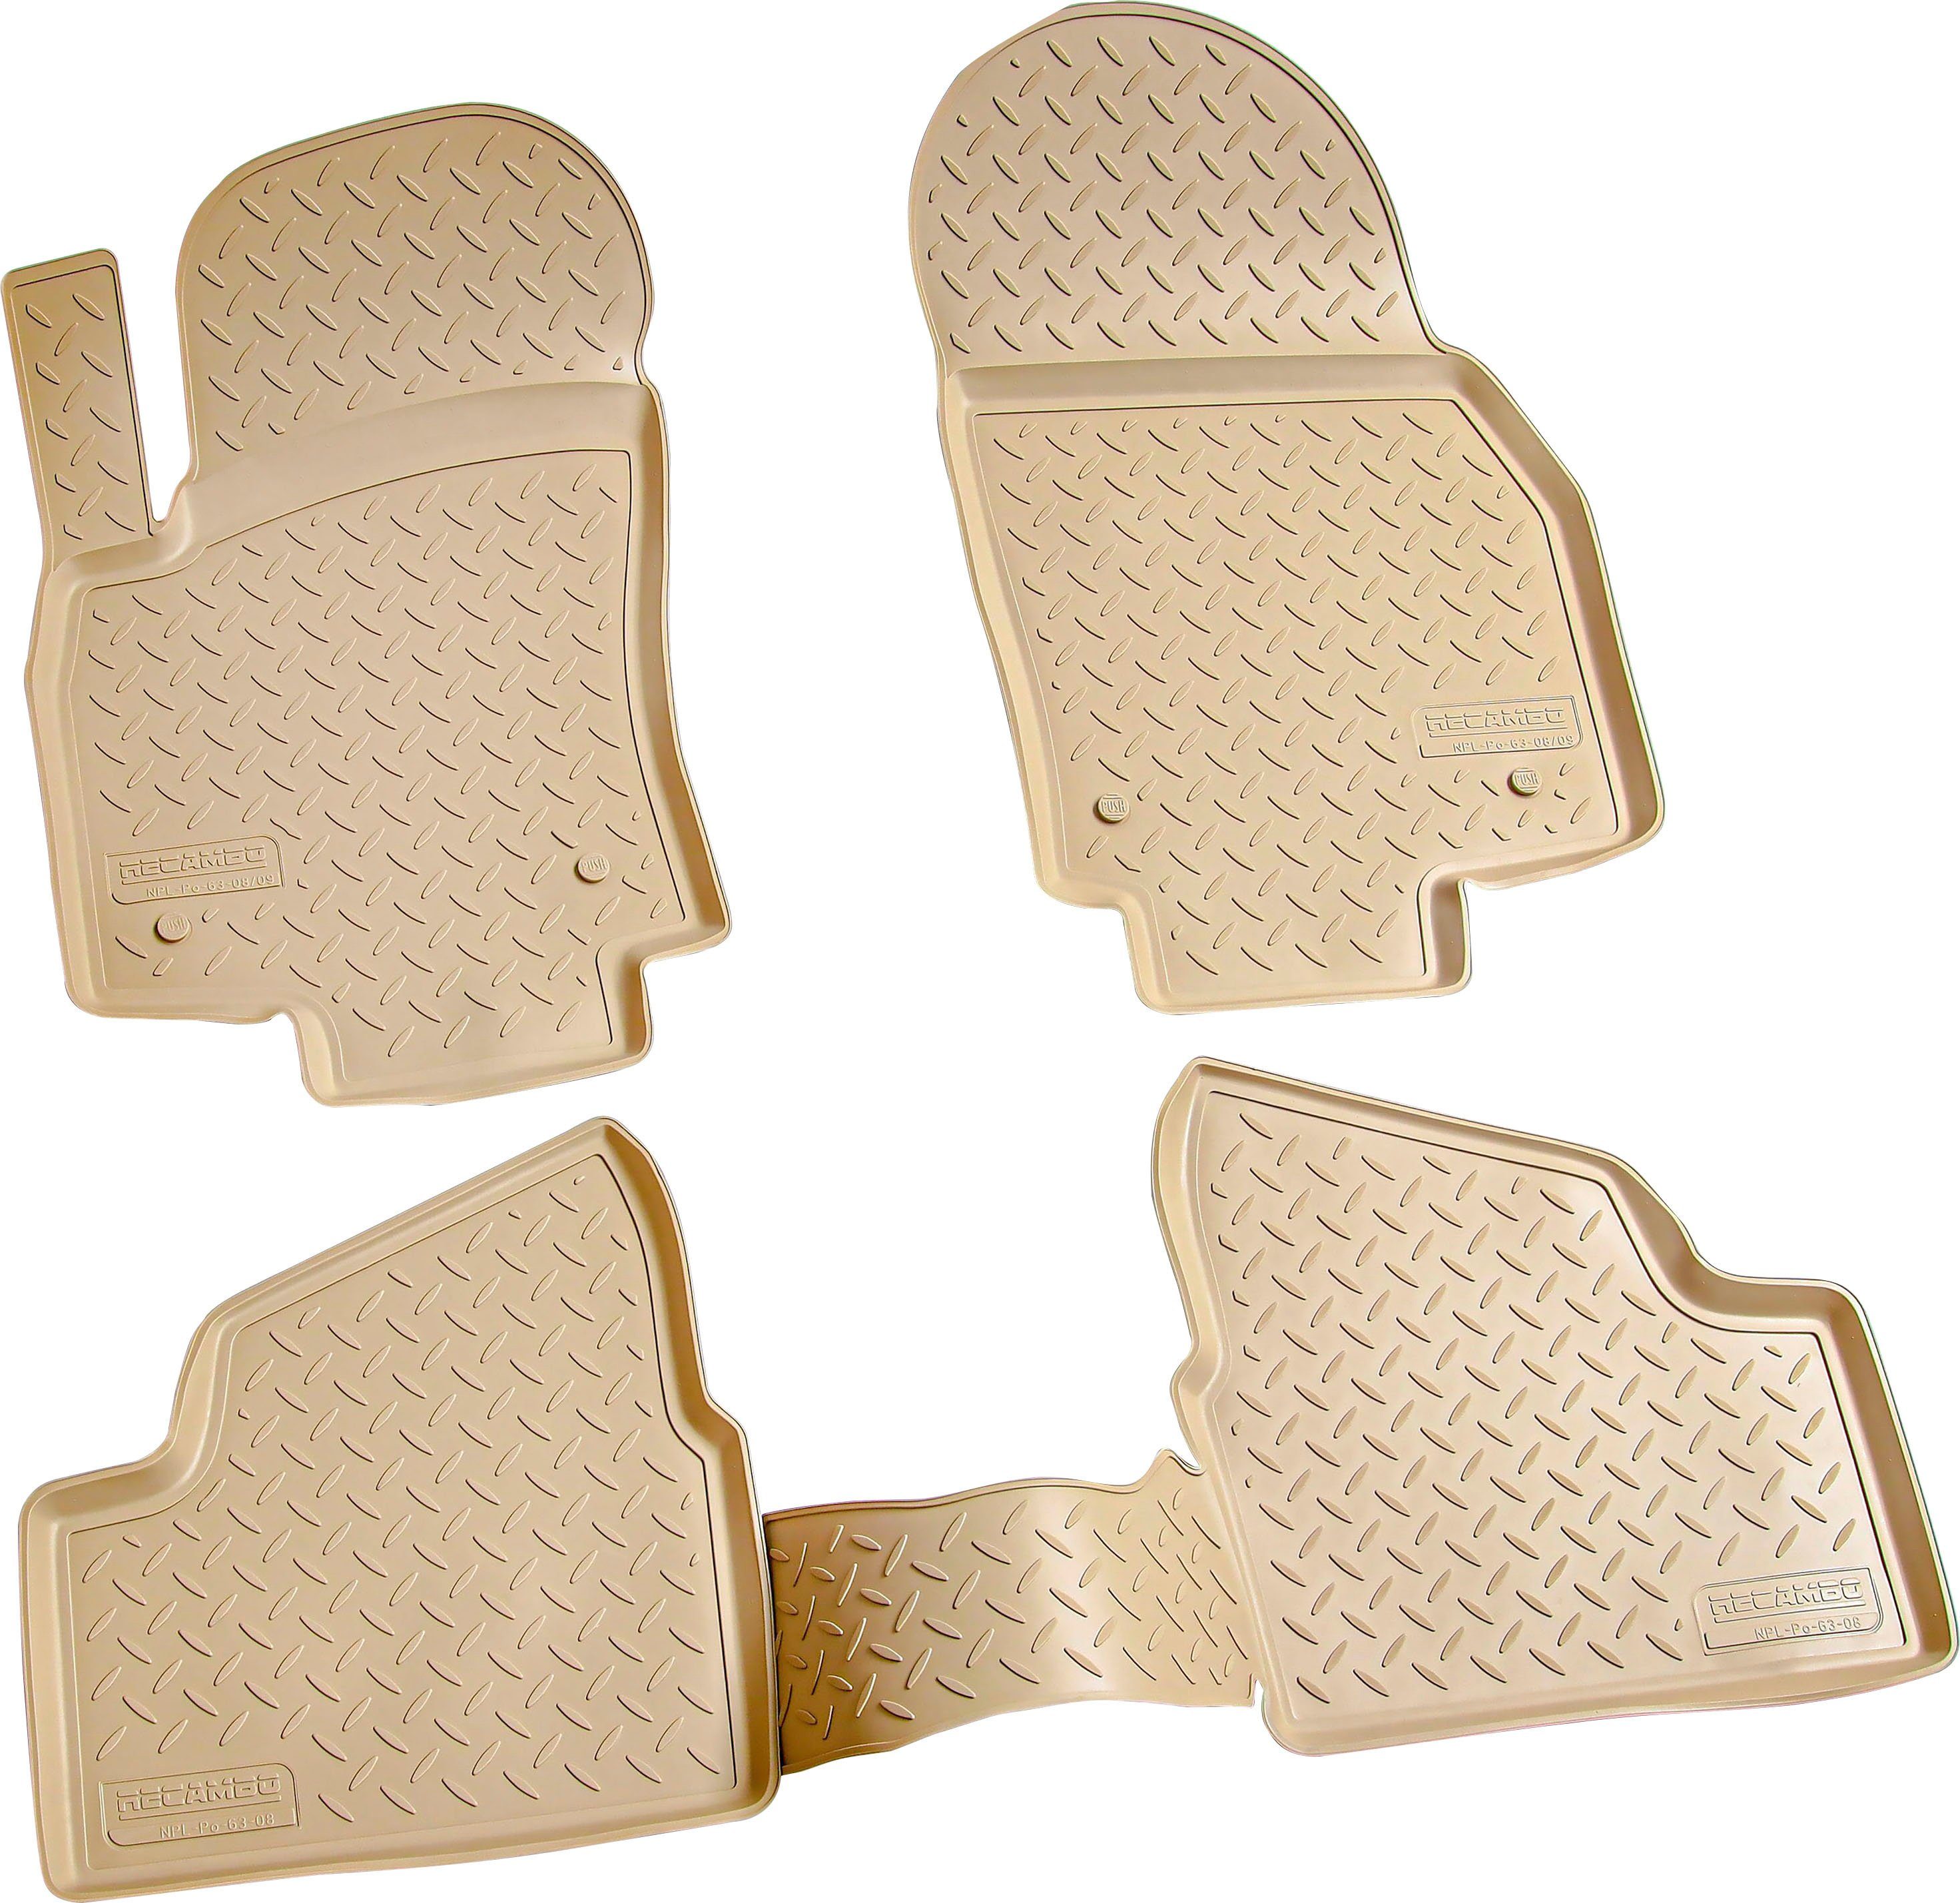 RECAMBO Passform-Fußmatten CustomComforts (4 St), für OPEL Astra, H 2004 - 2014, perfekte Passform